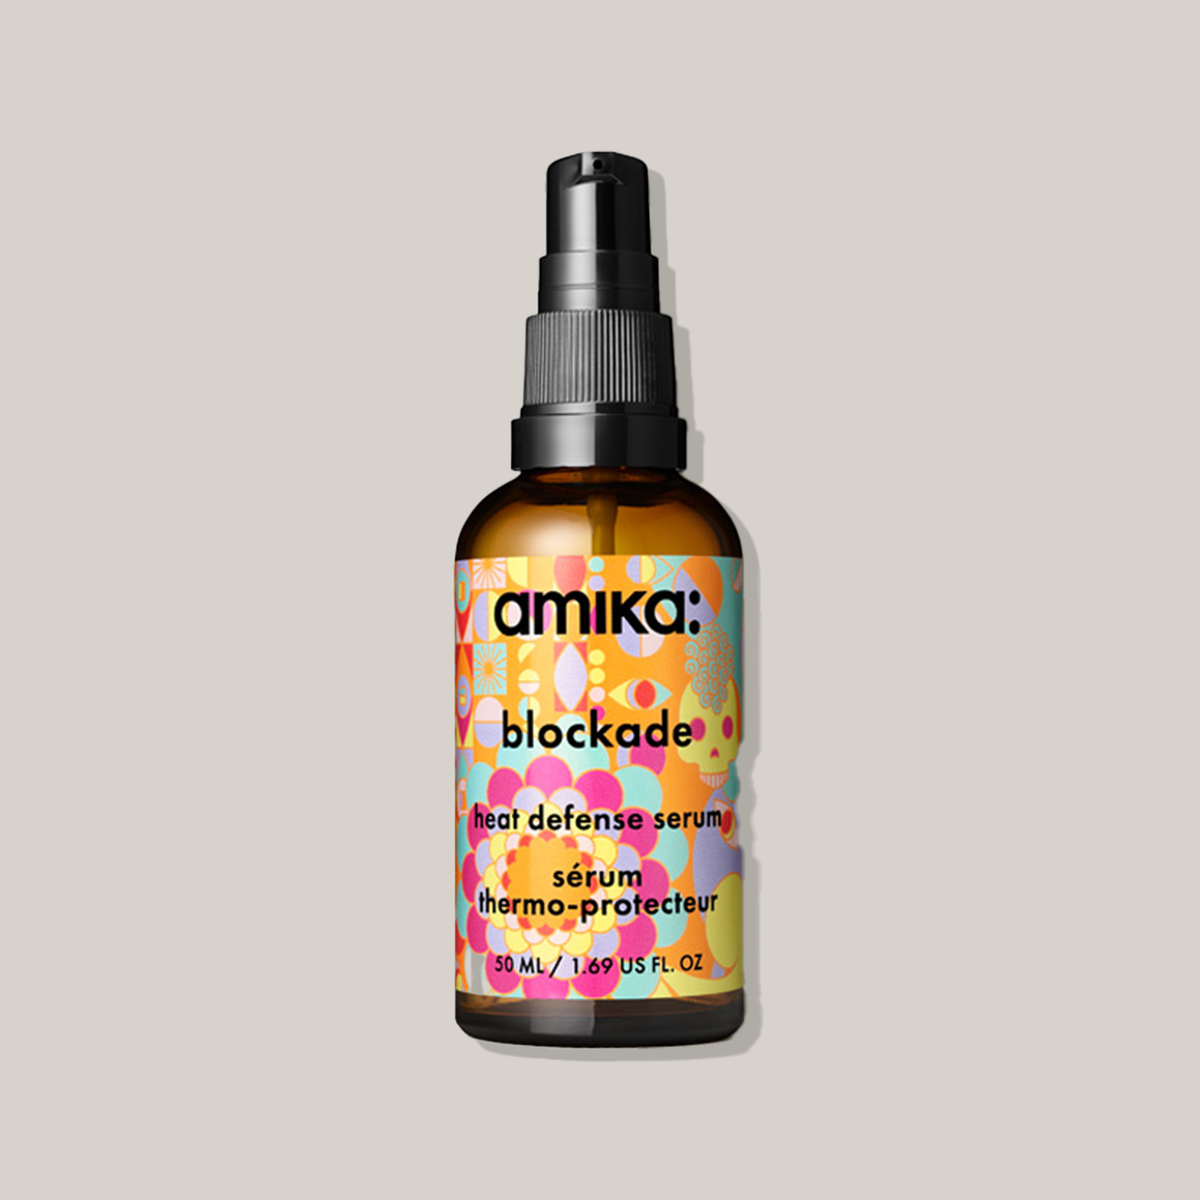 Amika - Blockade - Heat Defense Serum |1.69| - ProCare Outlet by Amika